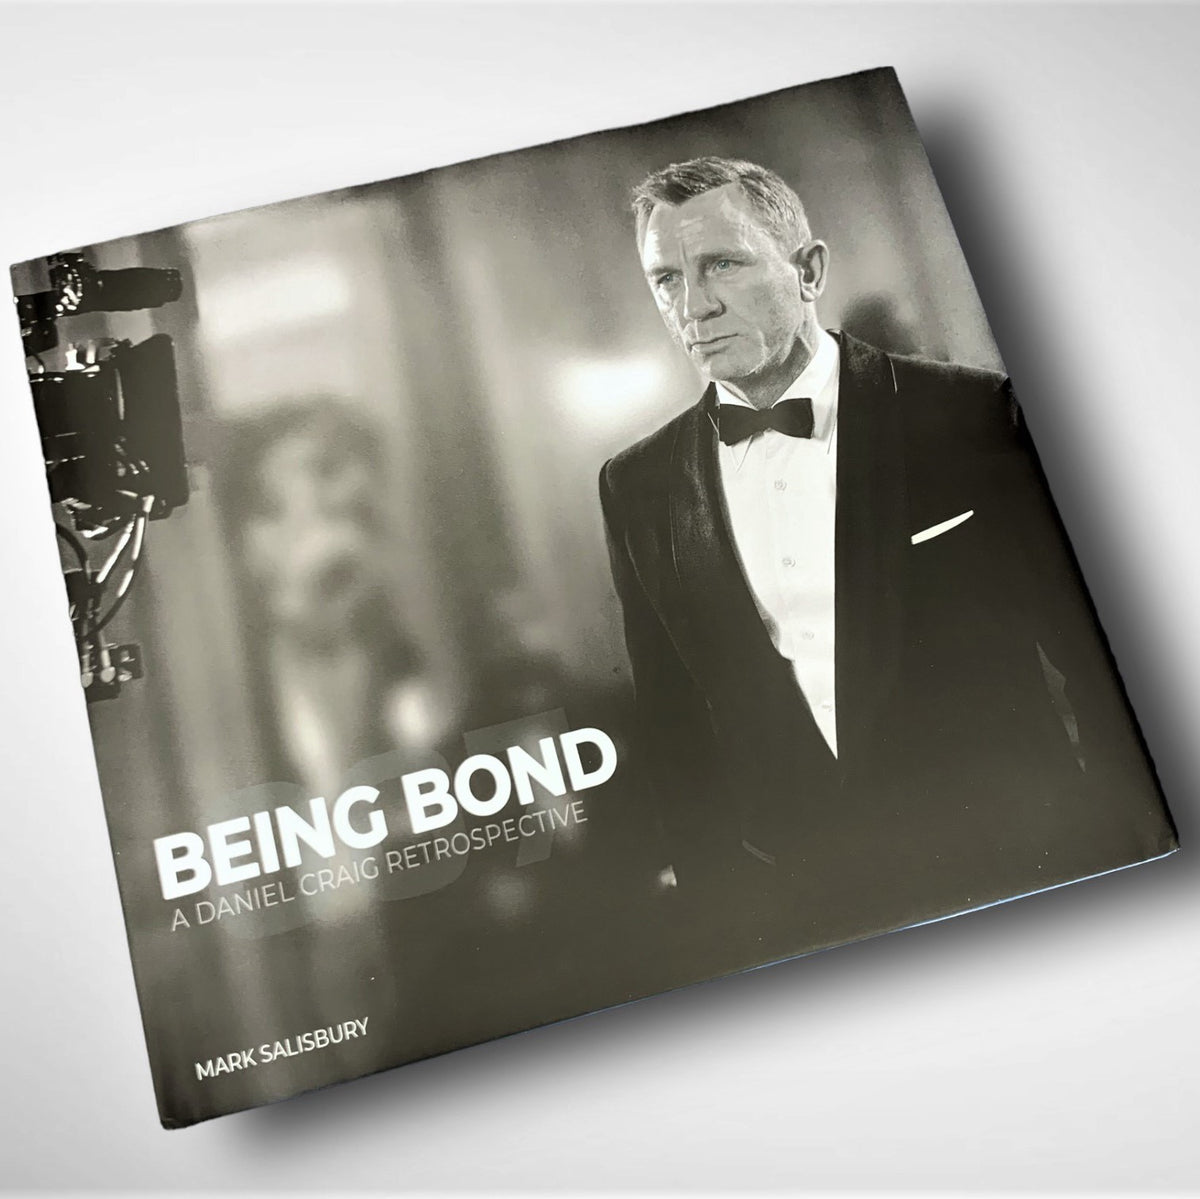 Being Bond - A Daniel Craig Retrospective Hardback Book